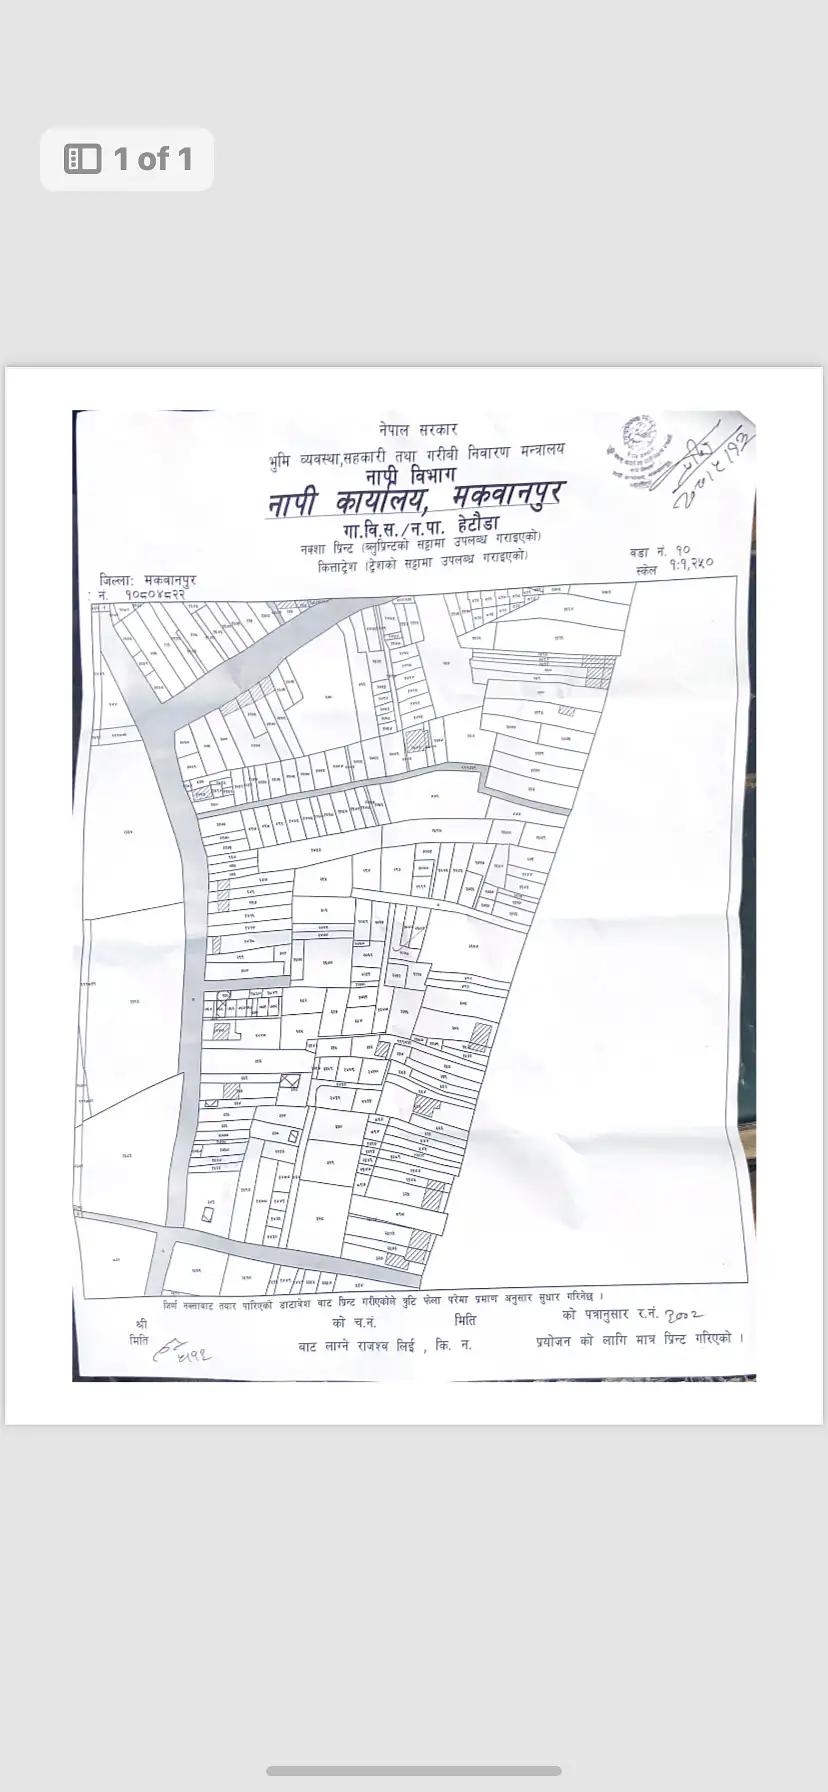  this property is located at hetauda bazar -image-2